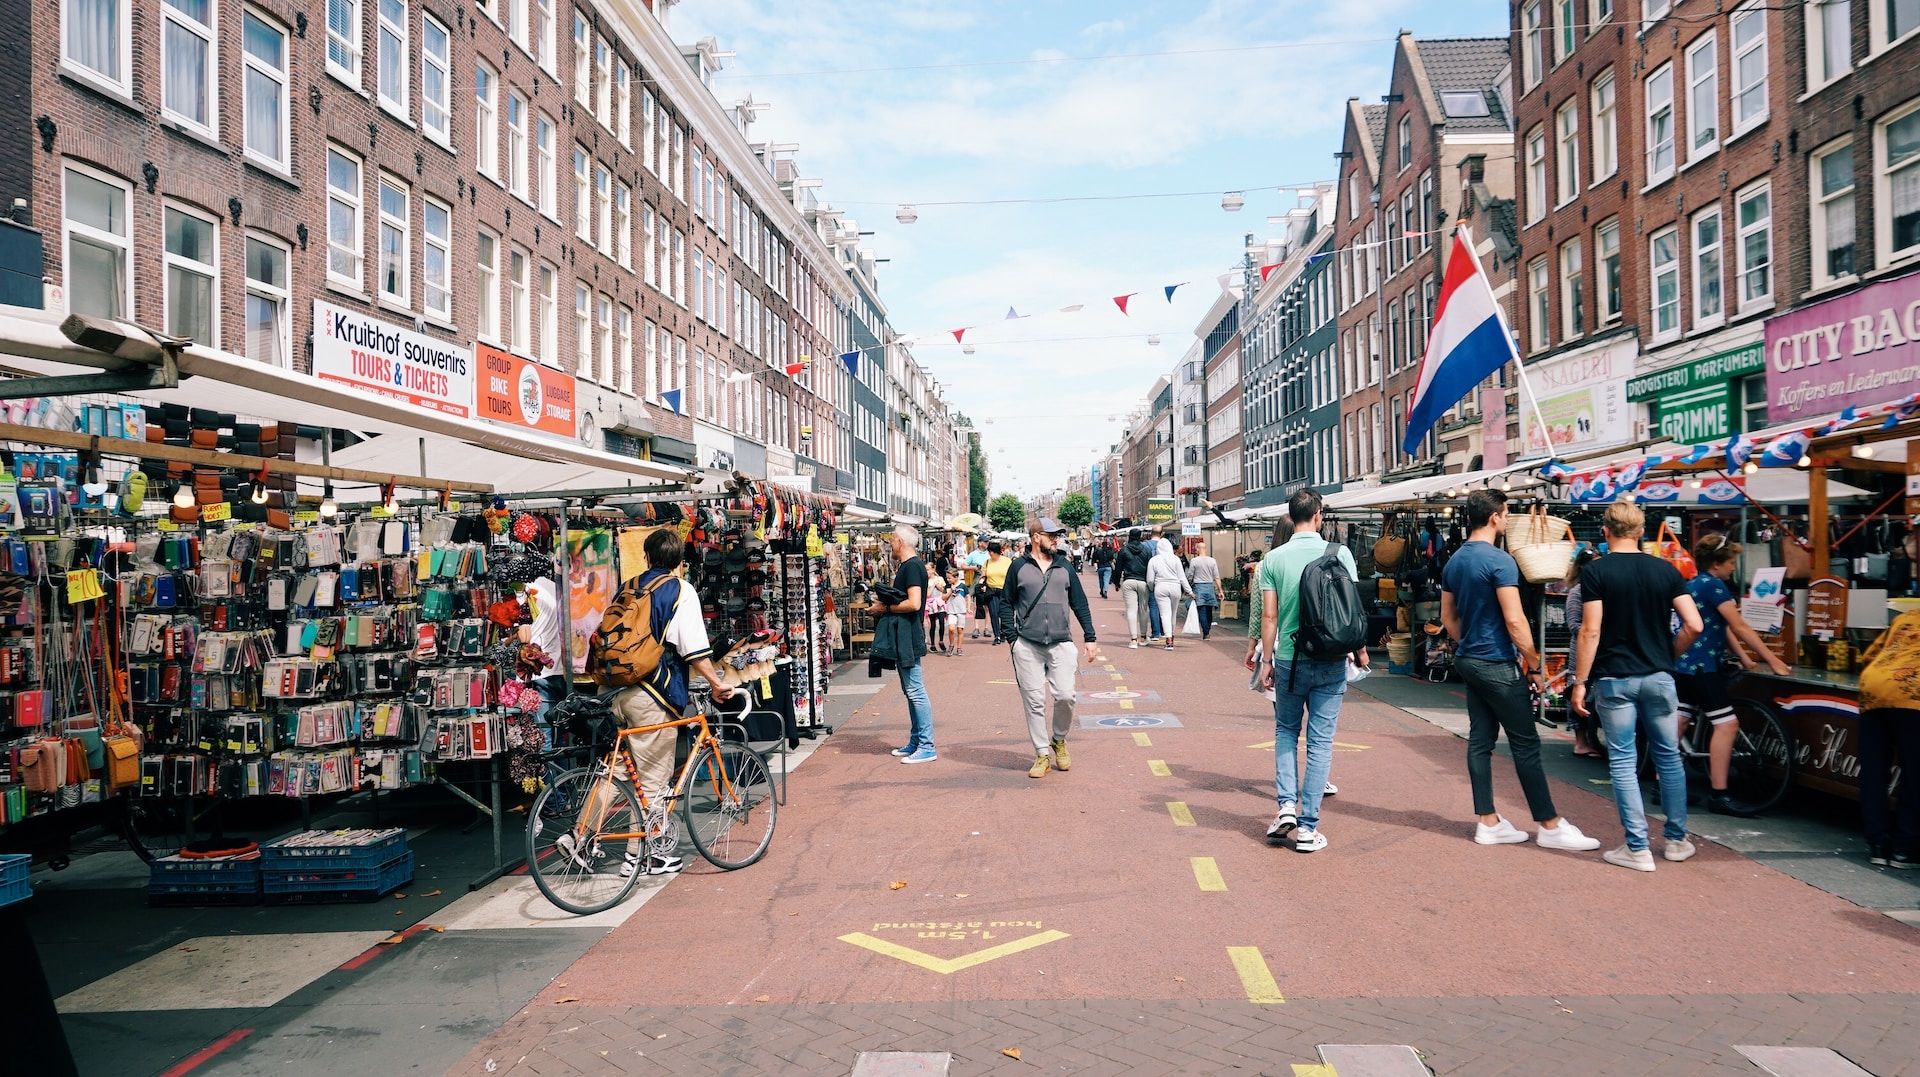 A market in Amsterdam